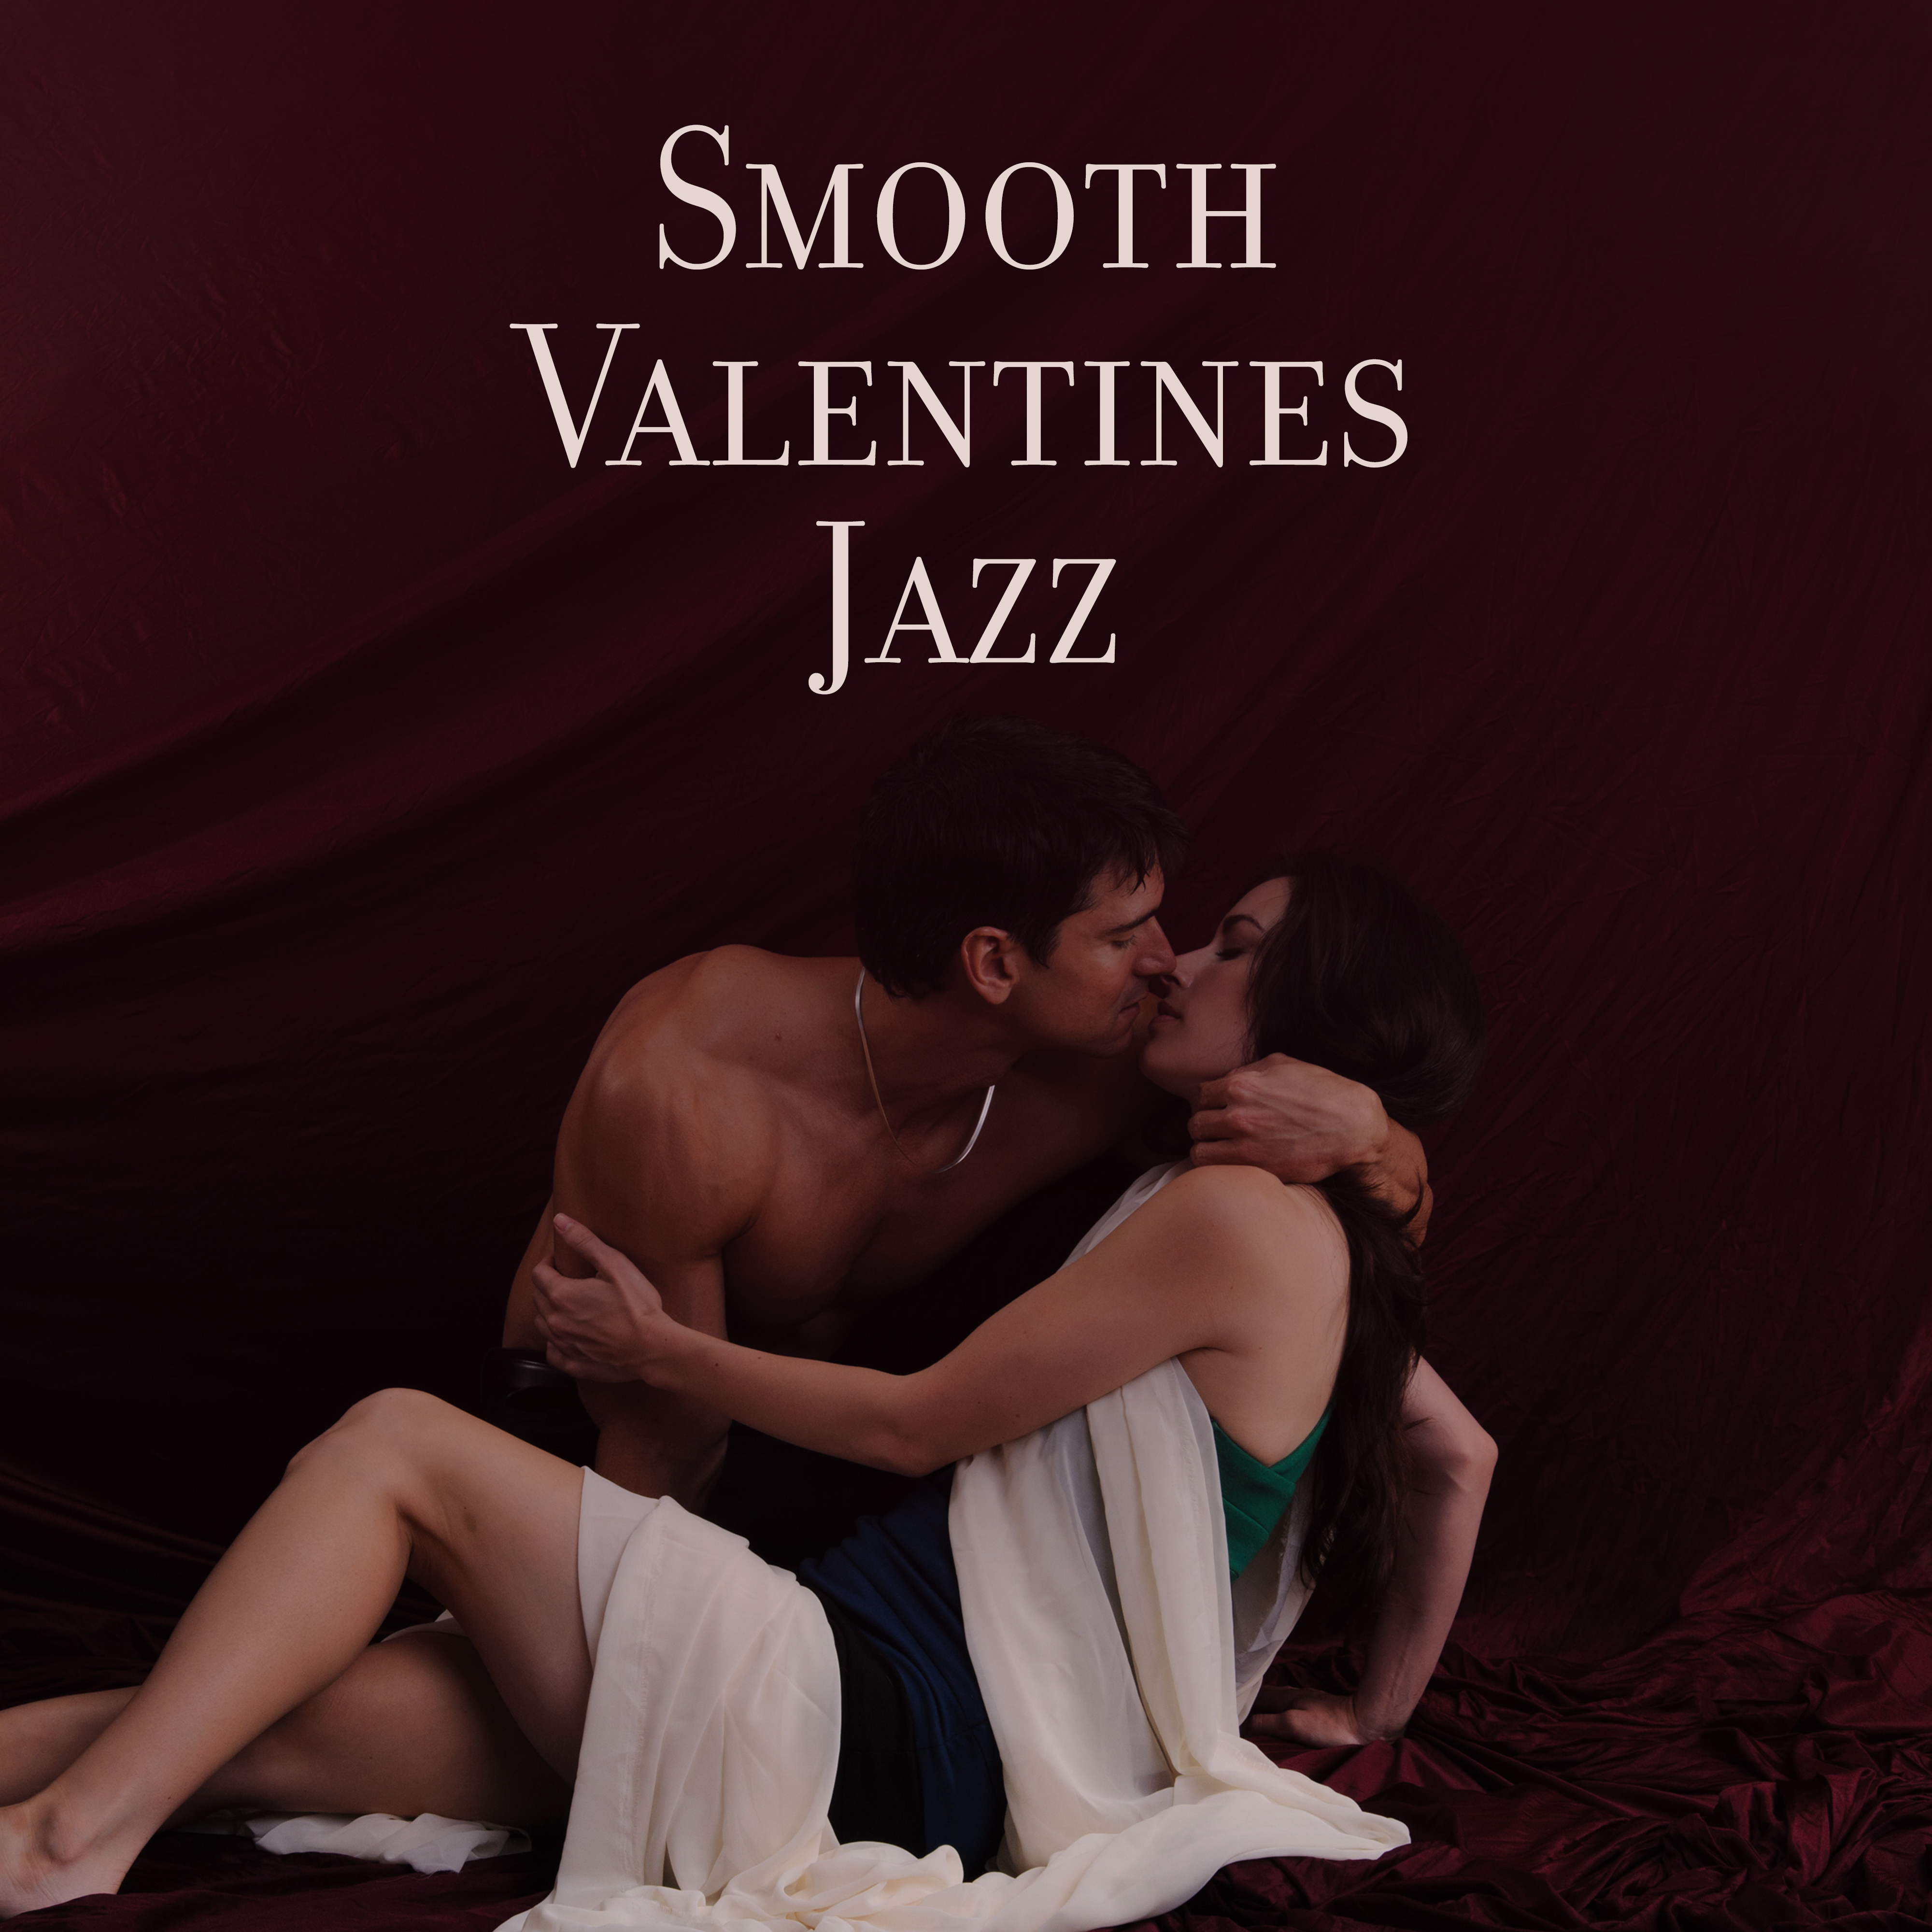 Smooth Valentines Jazz – Romantic Jazz Music, Sensual Vibes, Erotic Jazz Sounds, Sex Music, Jazz Relaxation